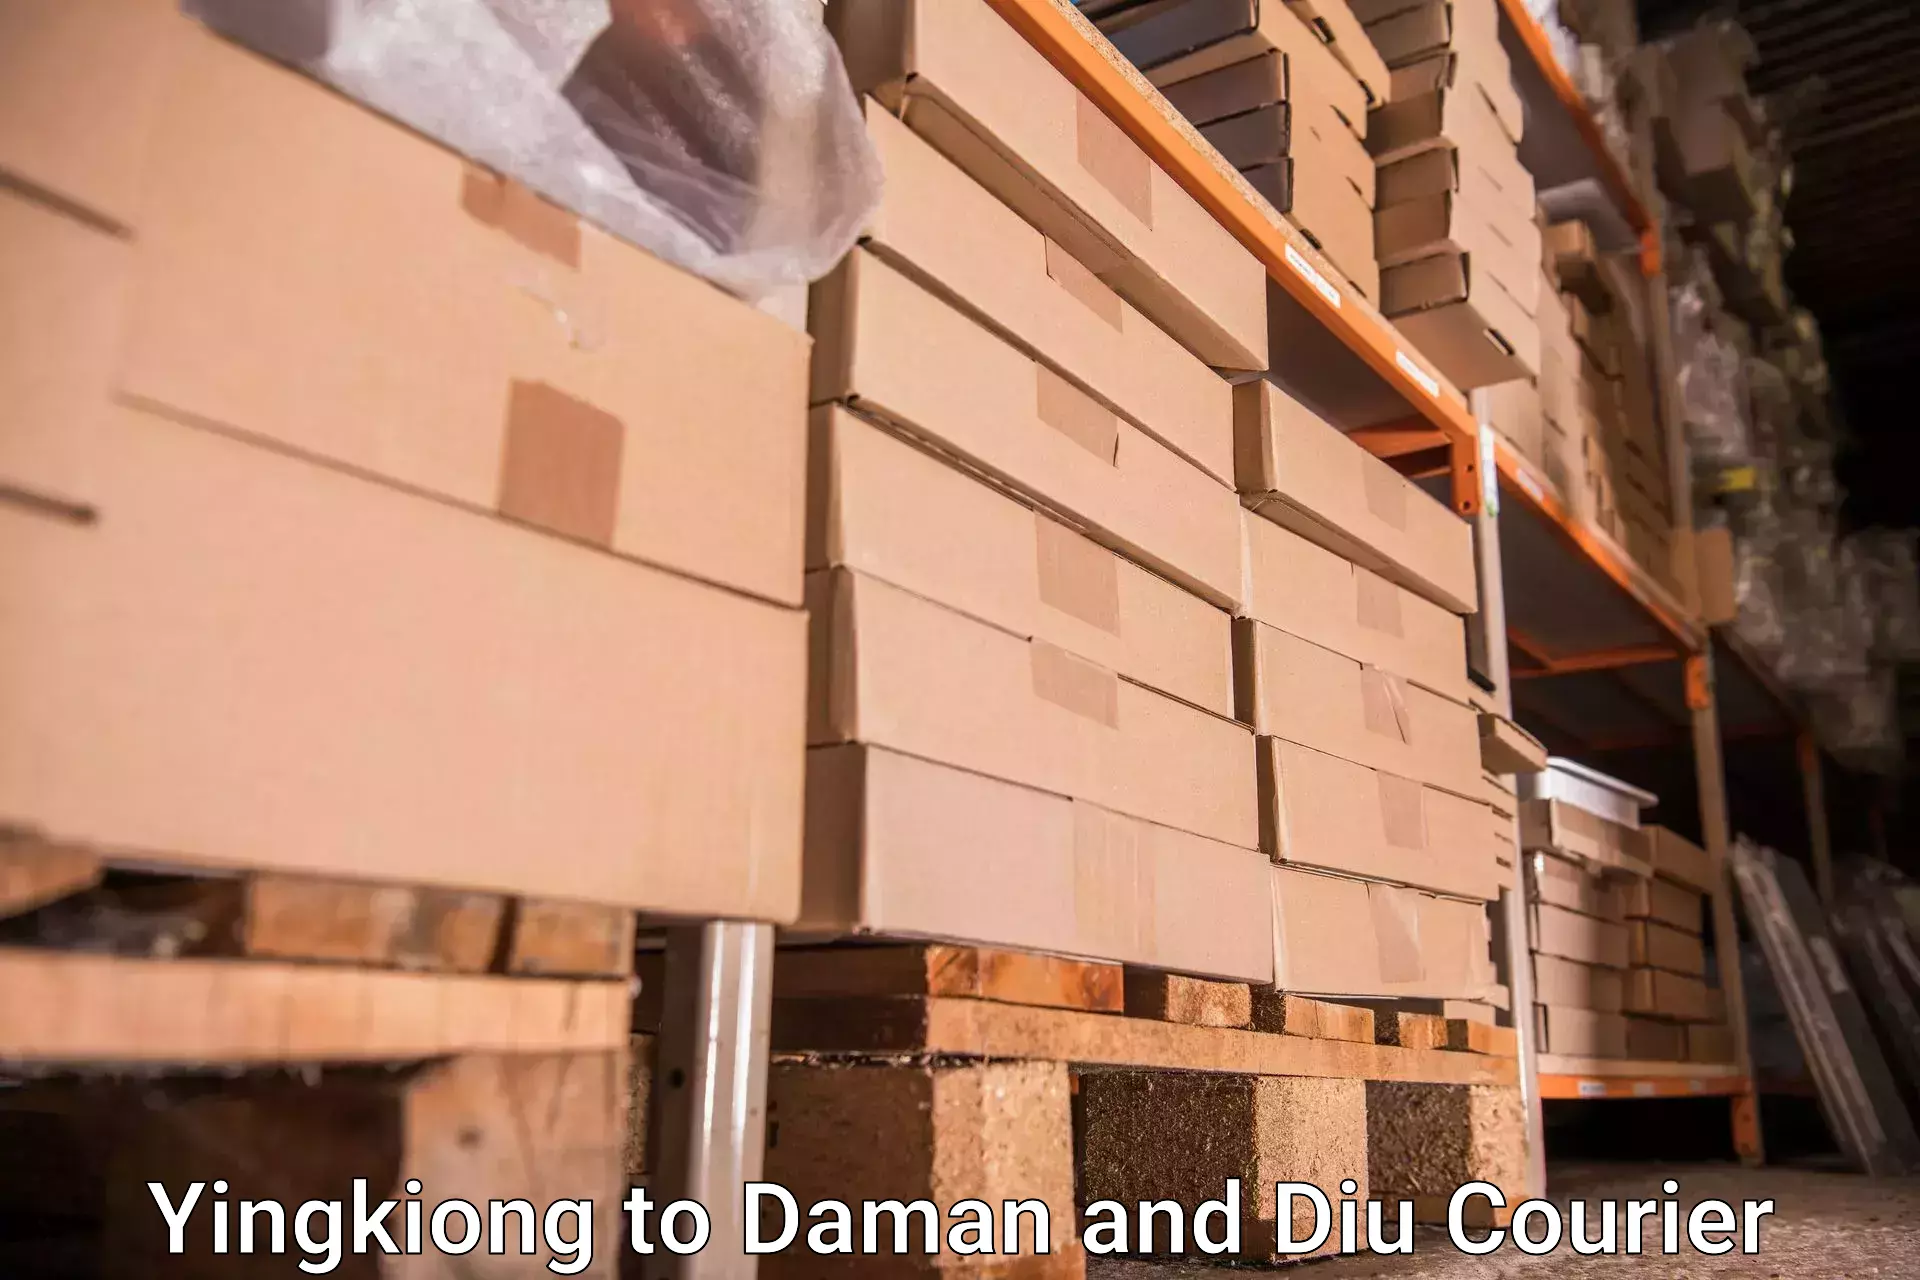 Baggage transport professionals Yingkiong to Daman and Diu